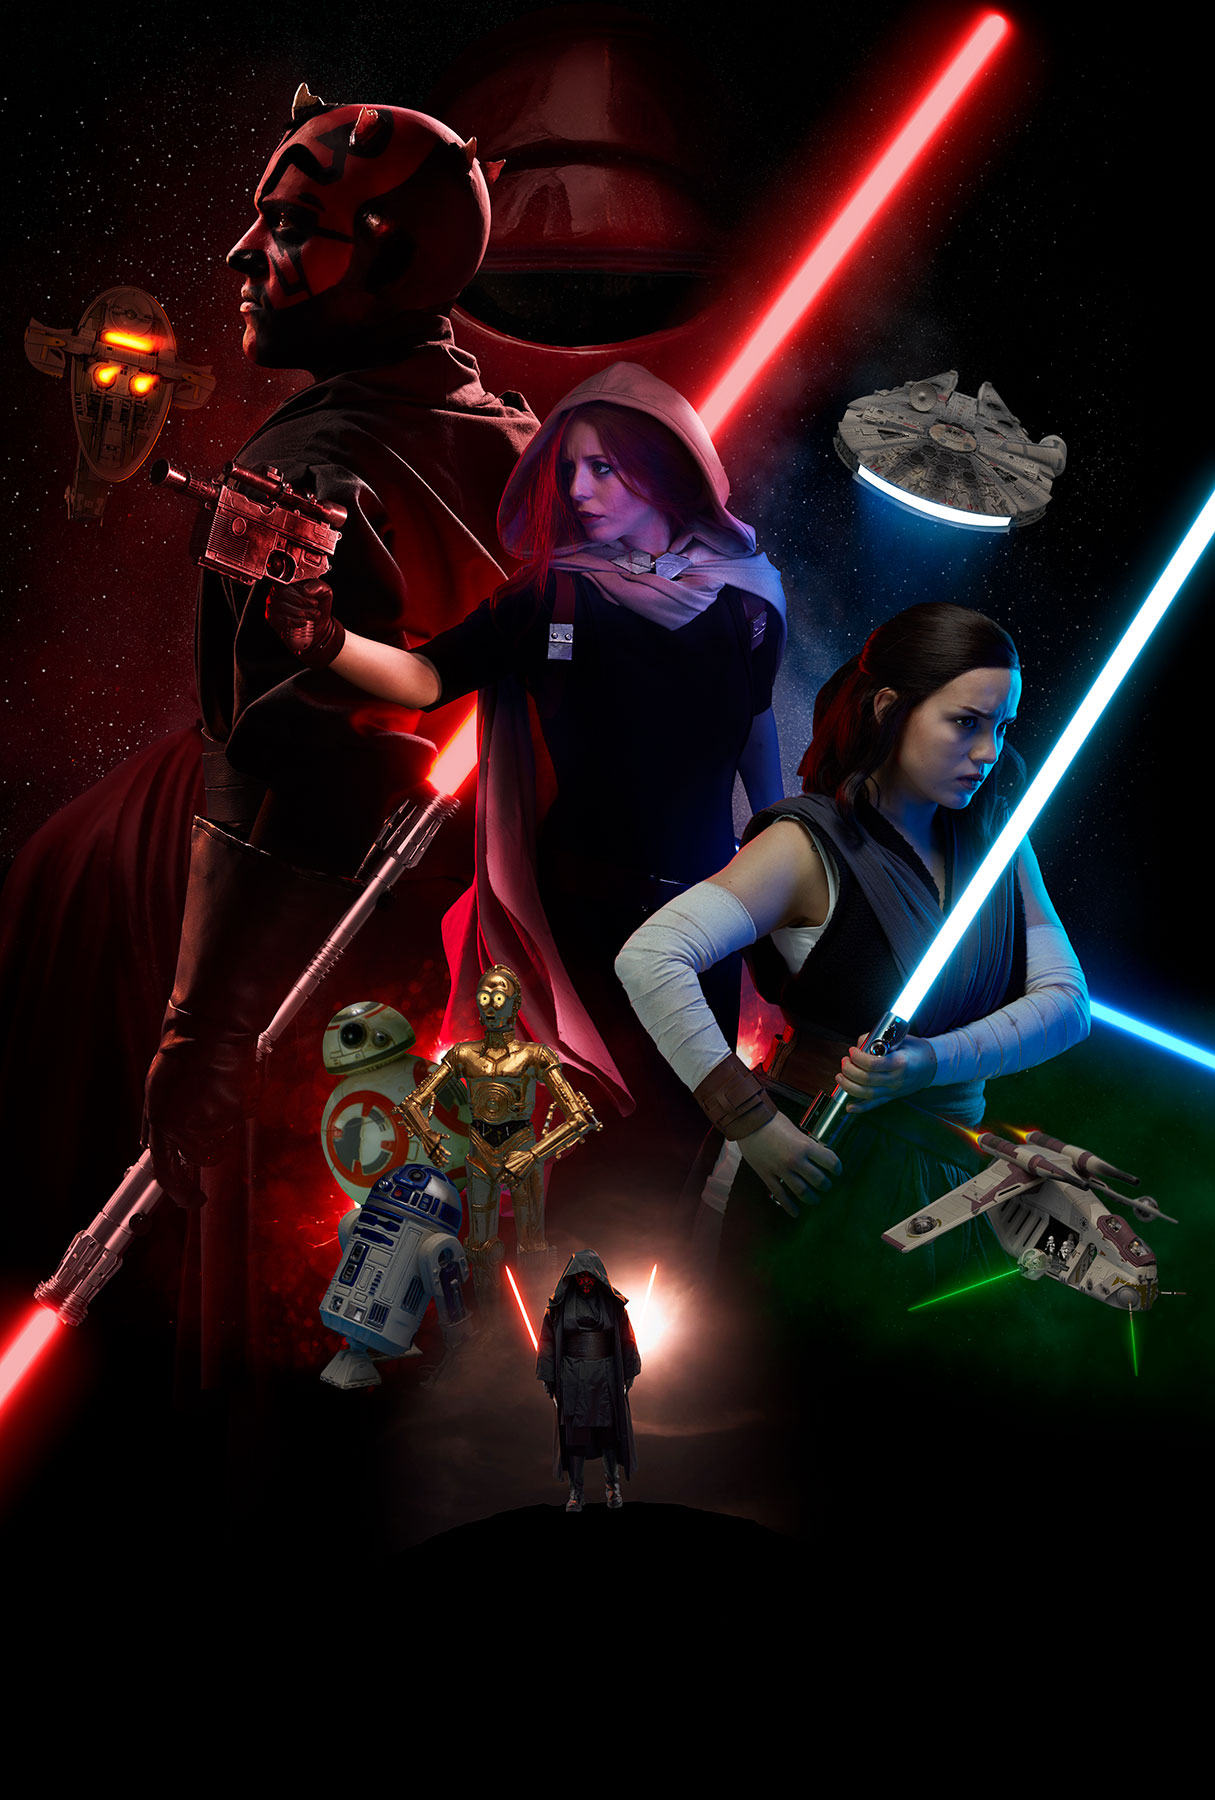 Sayanoff Arthur Star Wars Poster 02 07